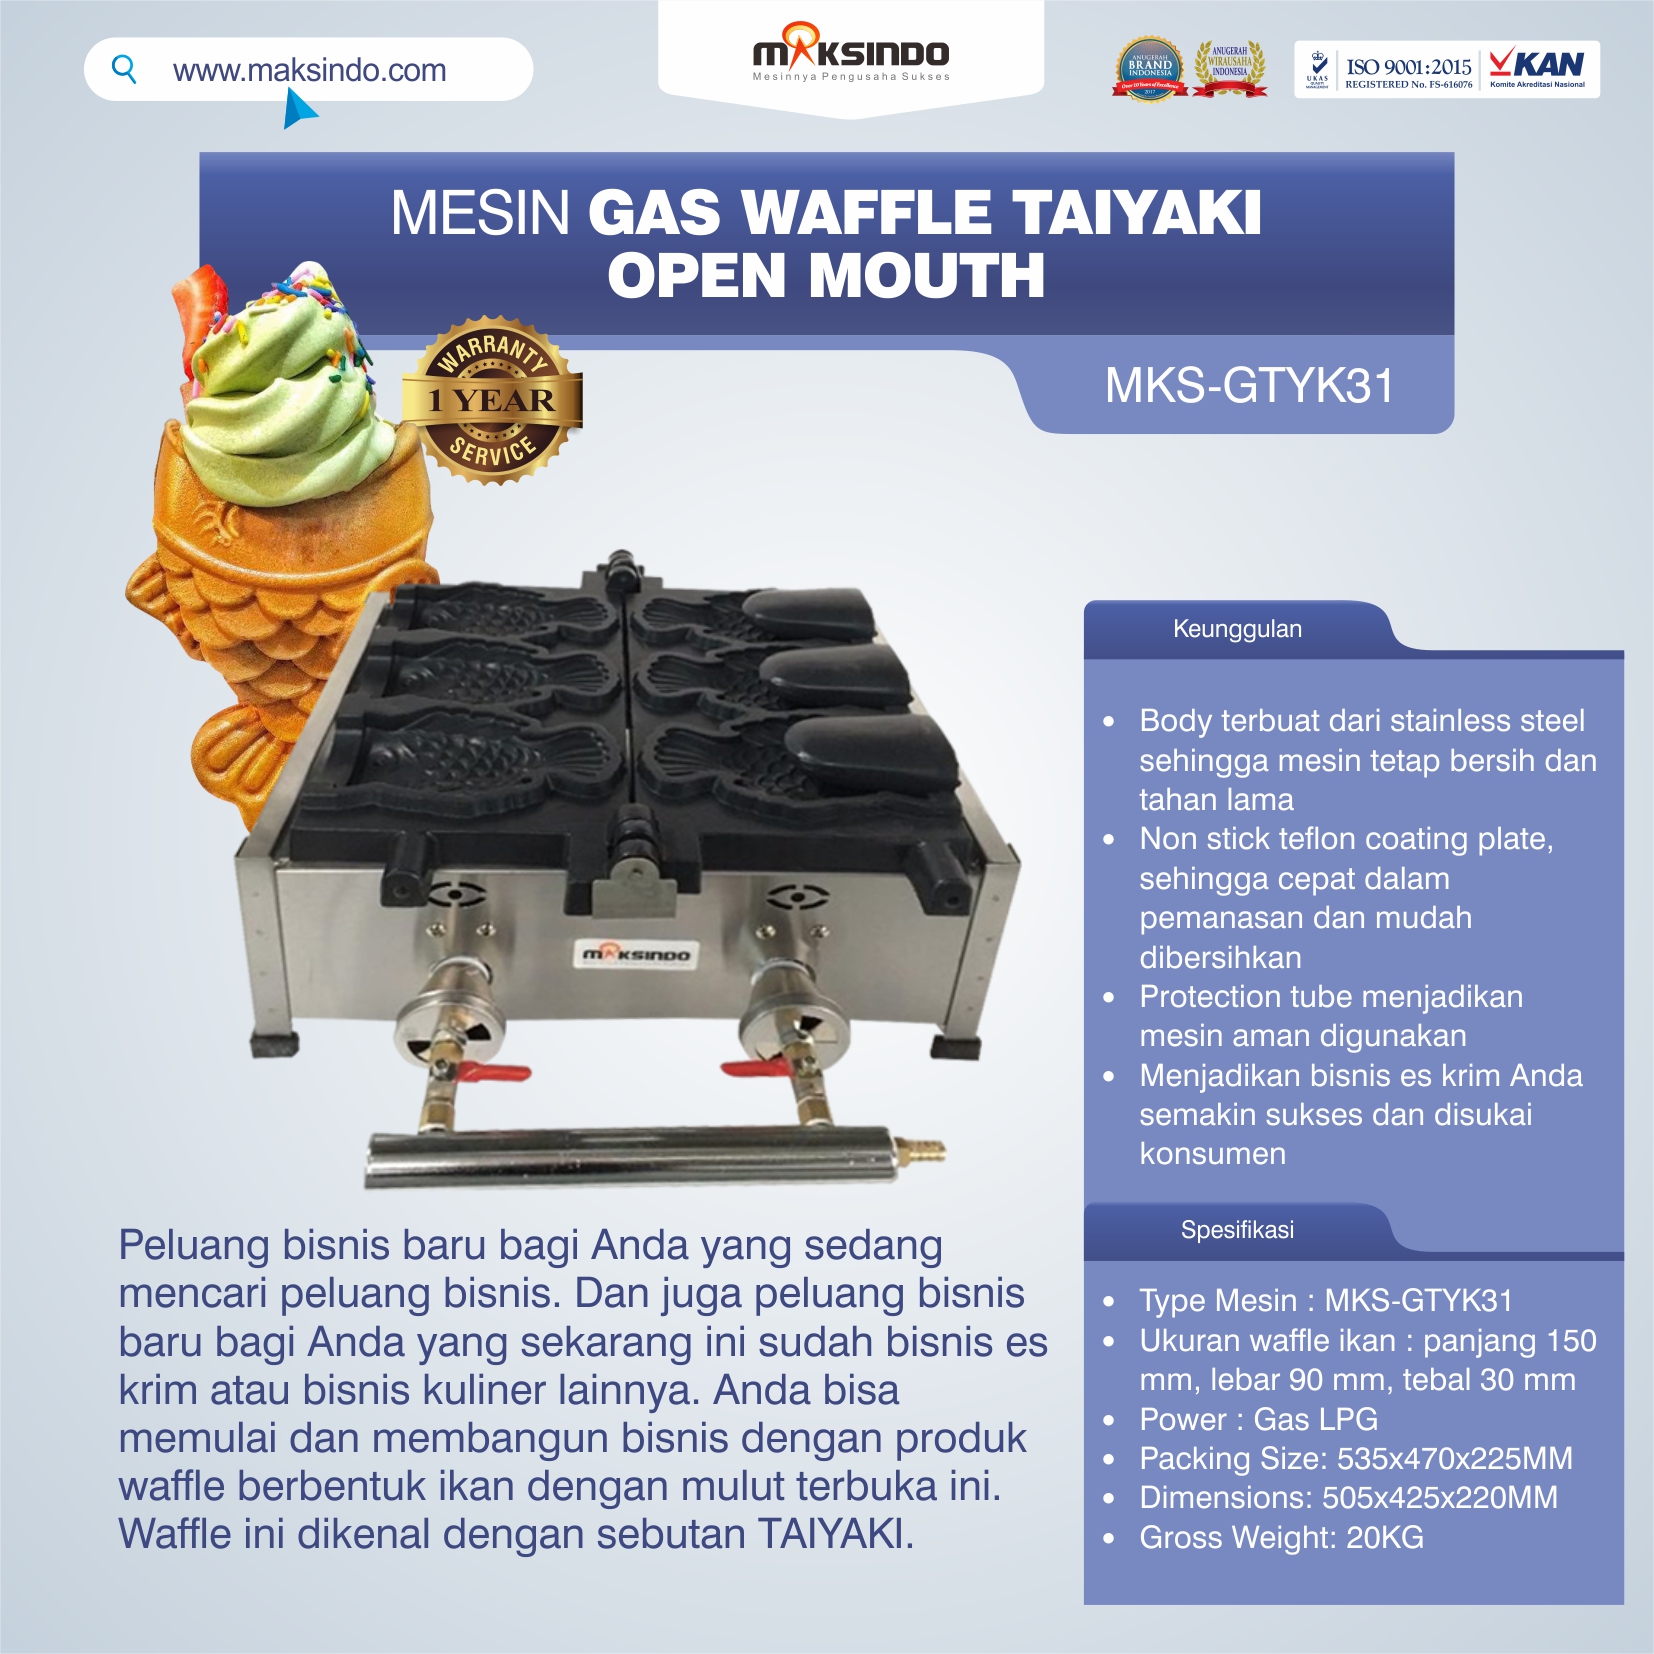 Jual Mesin Gas Waffle Taiyaki Open Mouth (GTYK31) di Solo